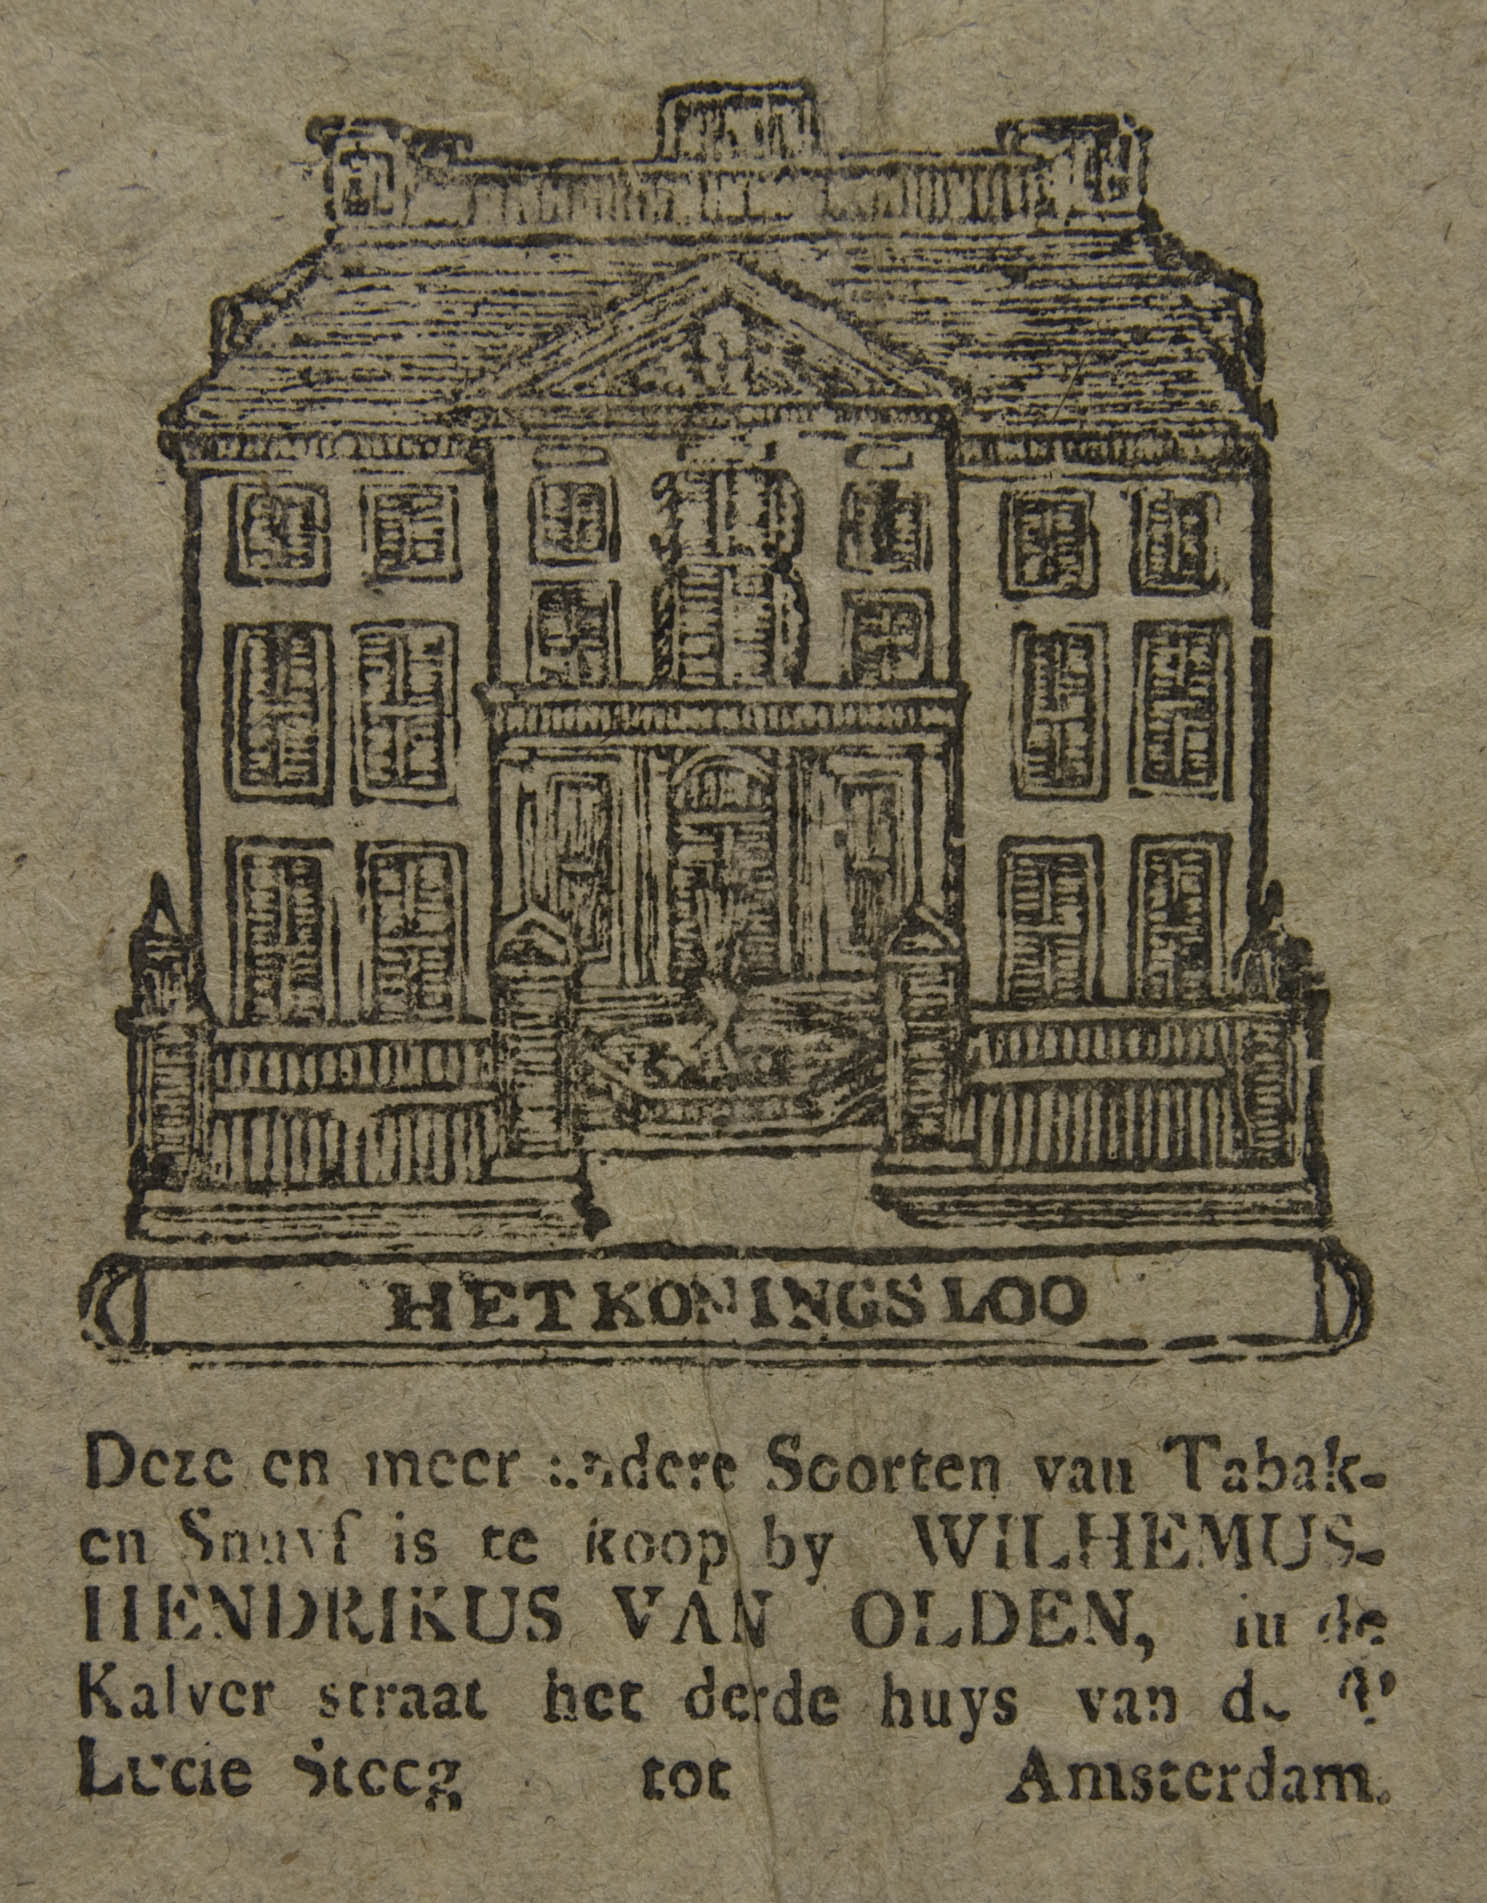 58-25.108-tobacco-wrapper-koningsloo-amsterdam-2